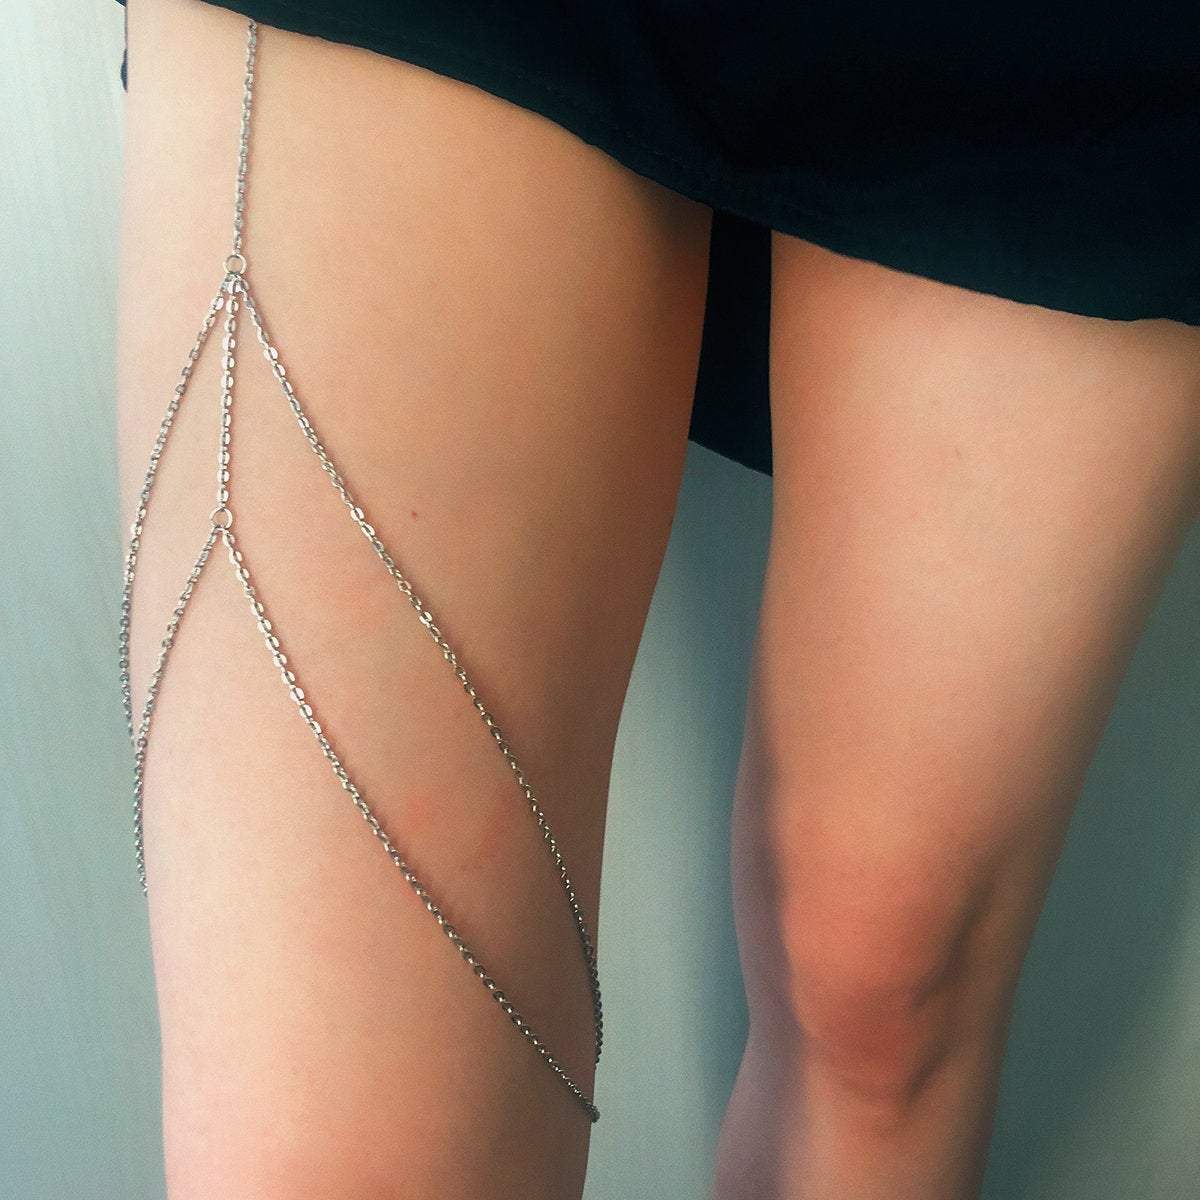 Dainty Layered Chic Womens Thigh Leg Chain - Bikini Beach Harness Body Chain - Body Jewelry Accessories for Women